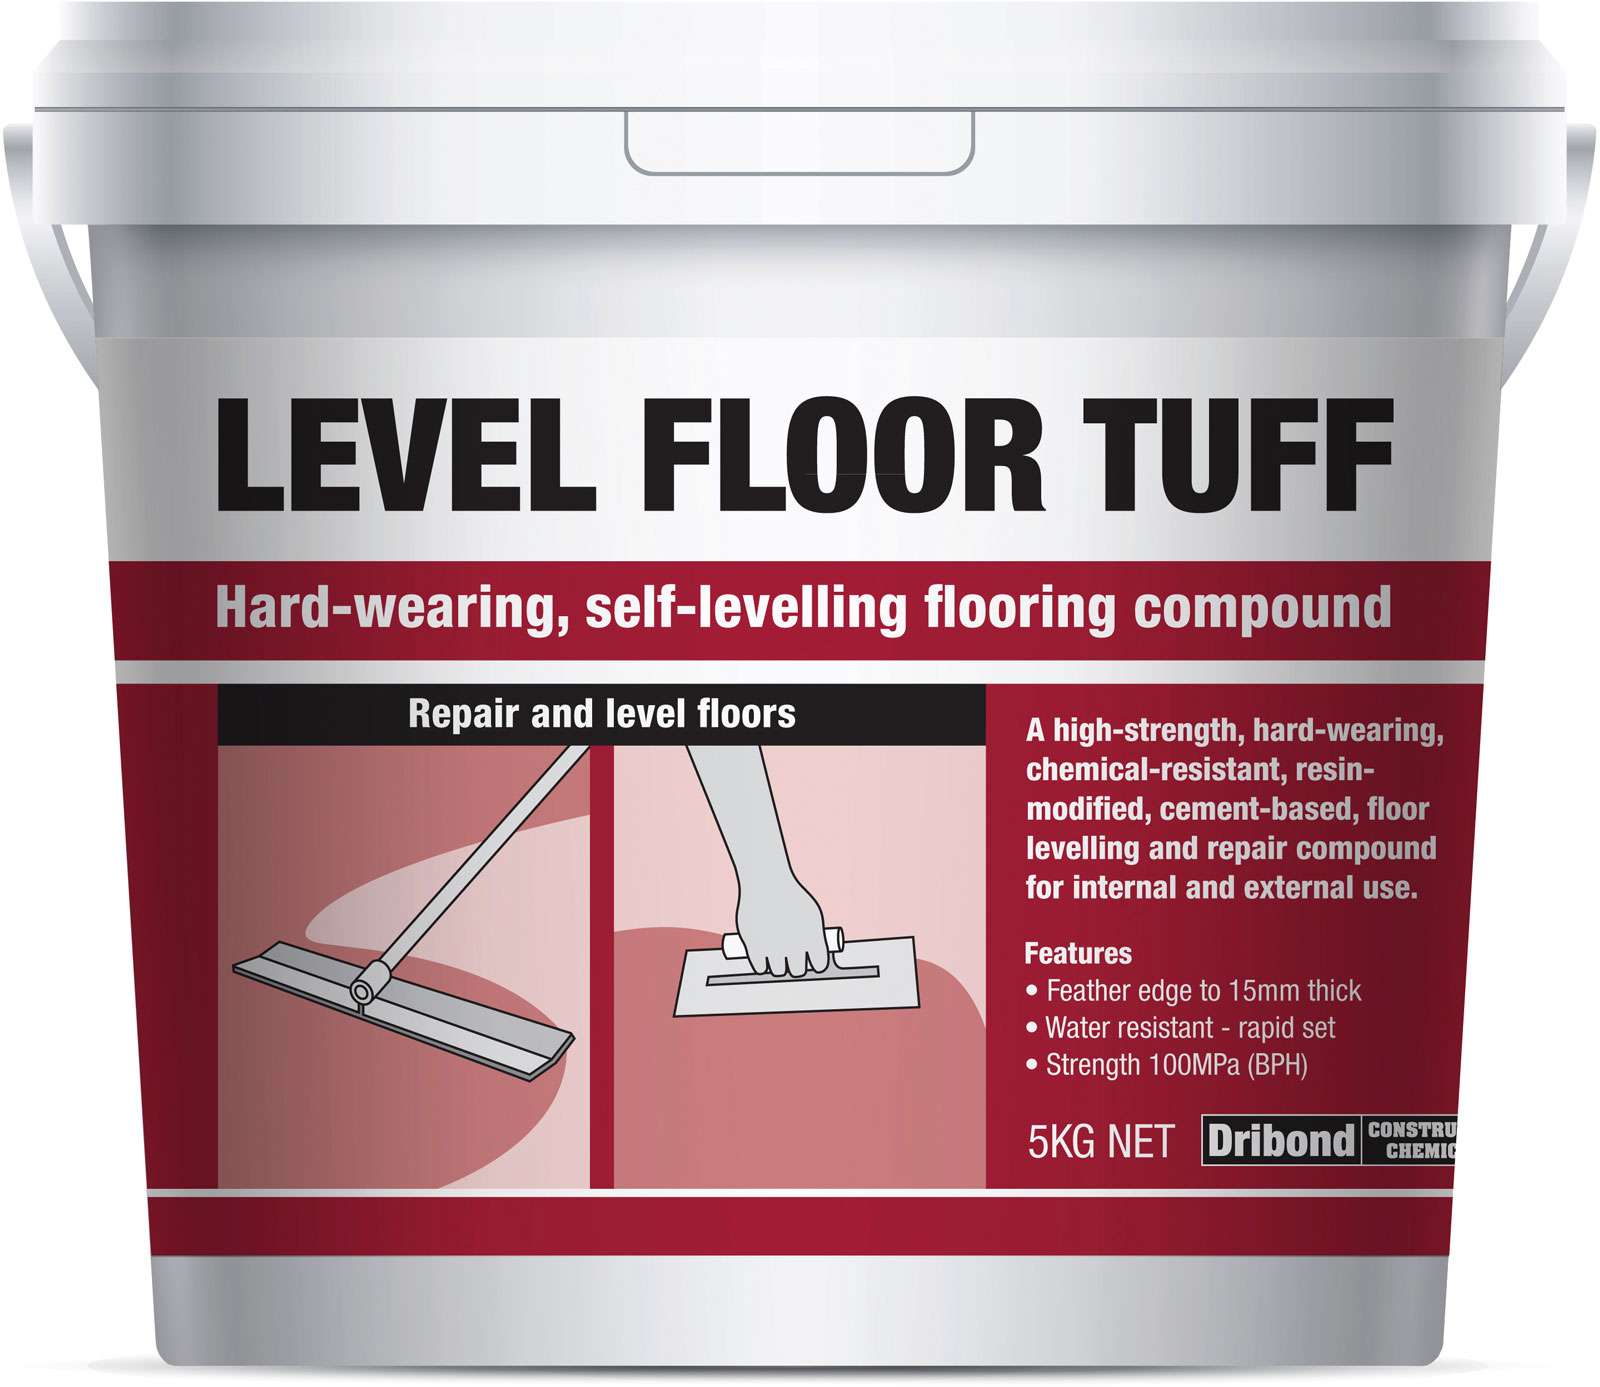 Level Floor Tuff Bucket